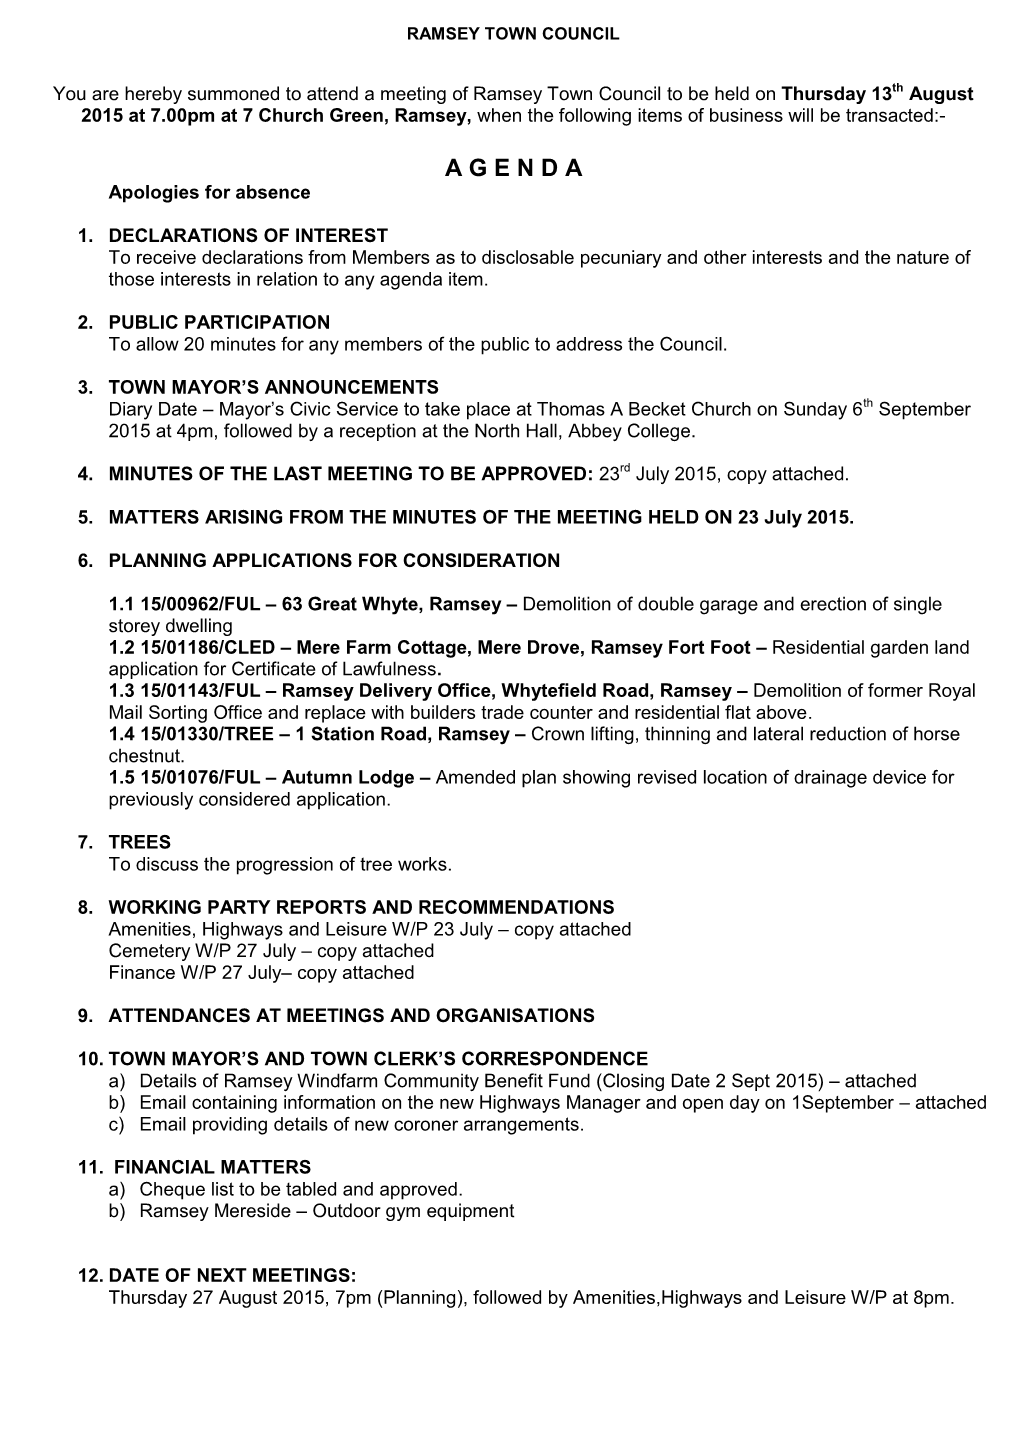 Agenda, Full Town Council 20150813